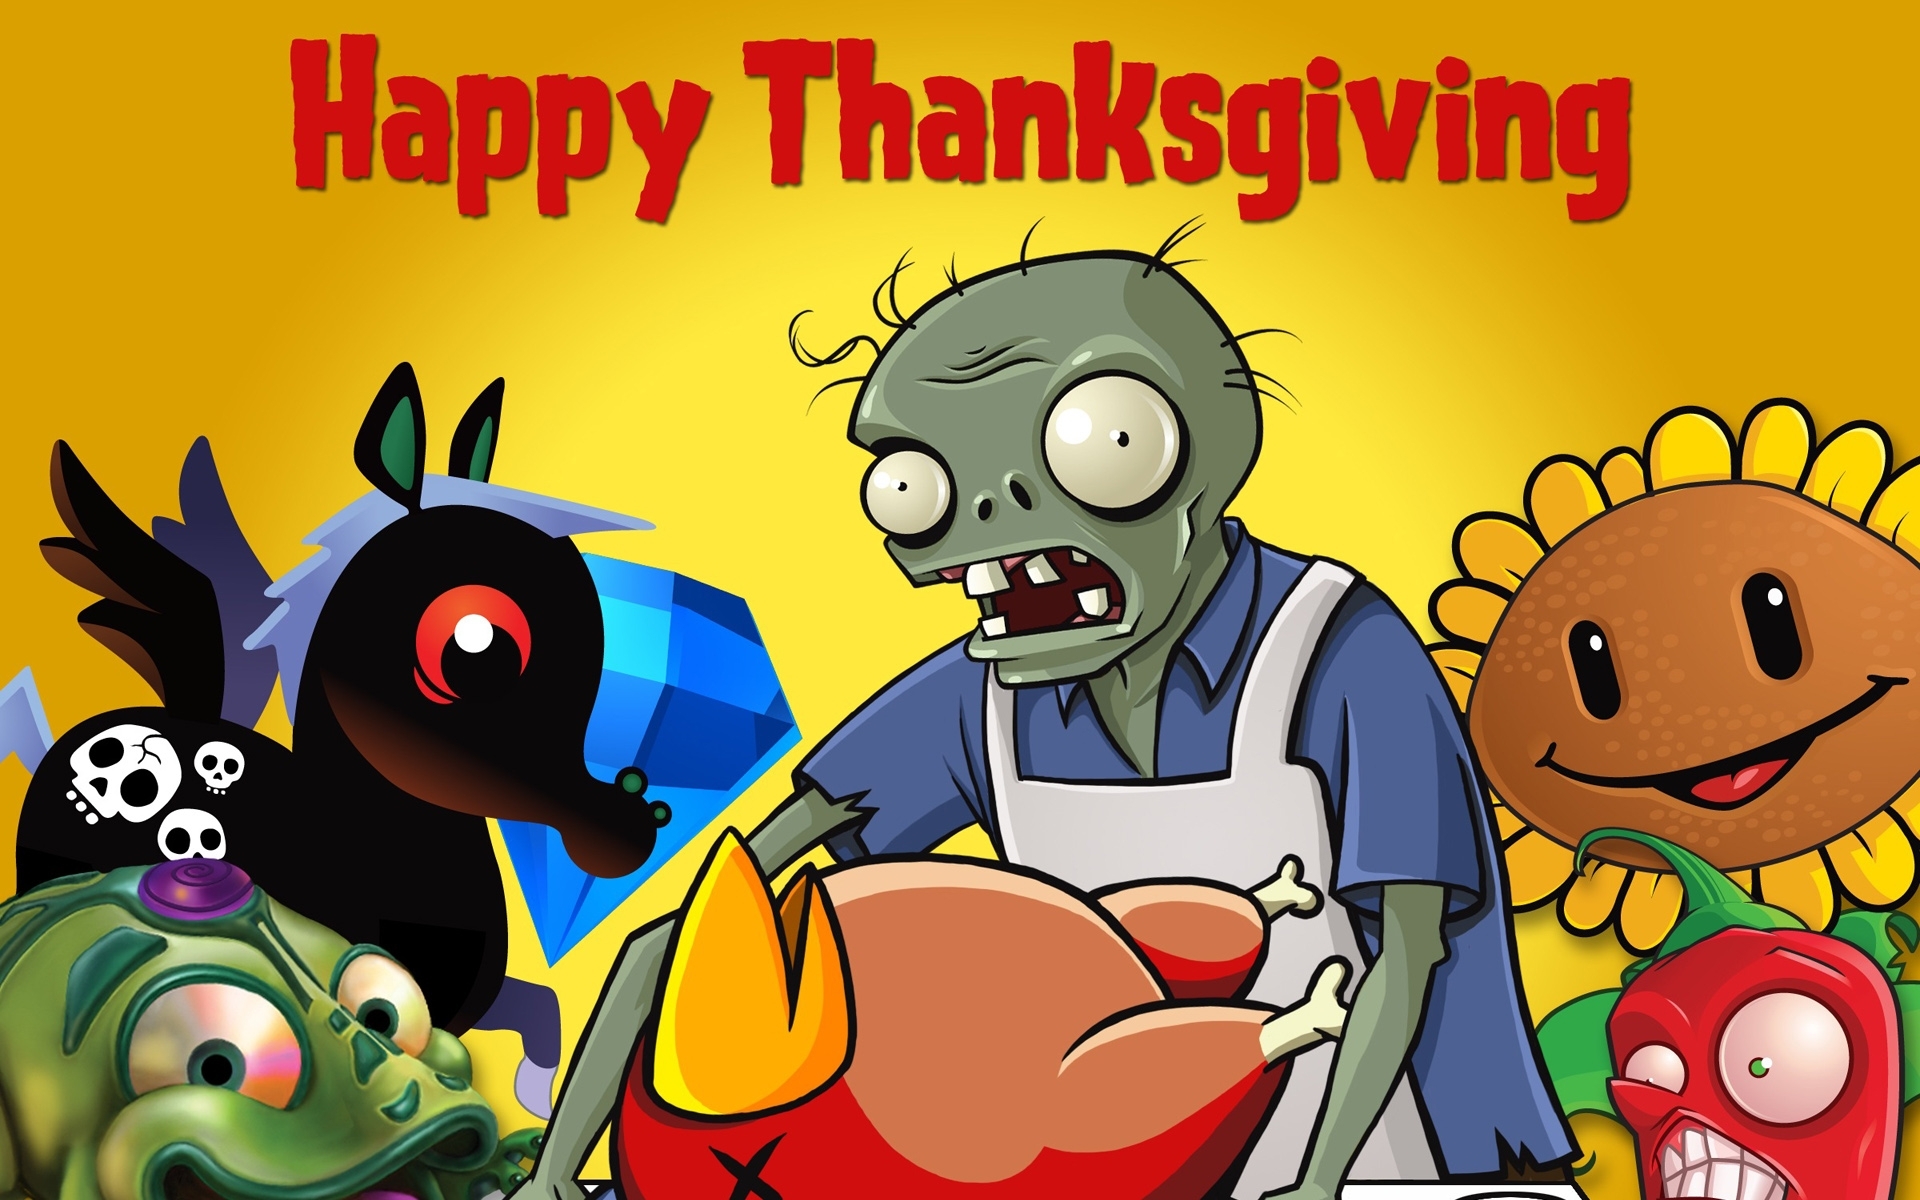 Lock Screen PC Wallpaper thanksgiving, holiday, plants vs zombies